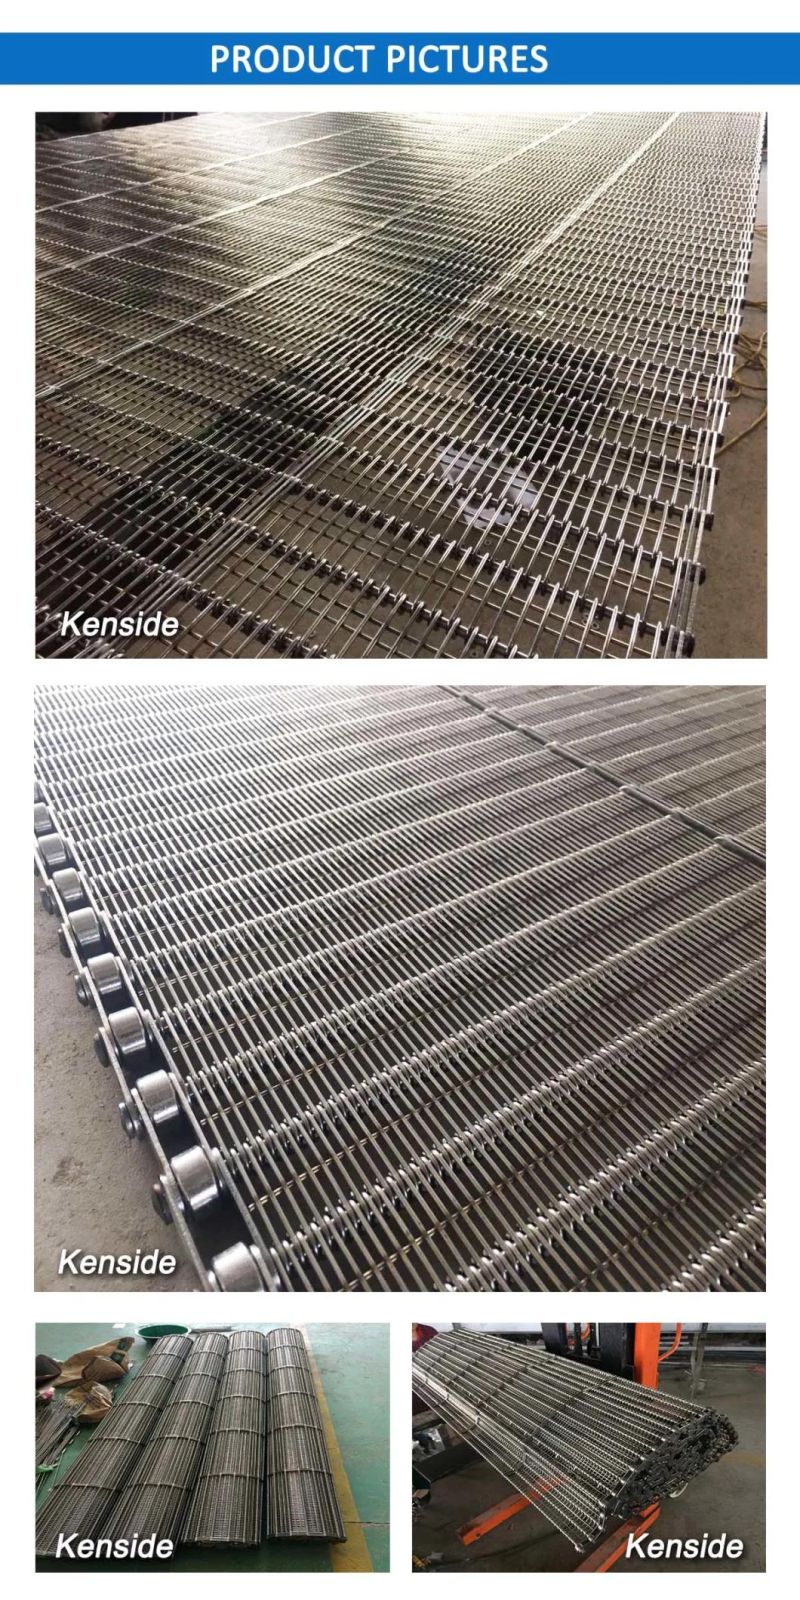 Stainless Steel Eye Link Conveyor Belt for Food Processing Industry